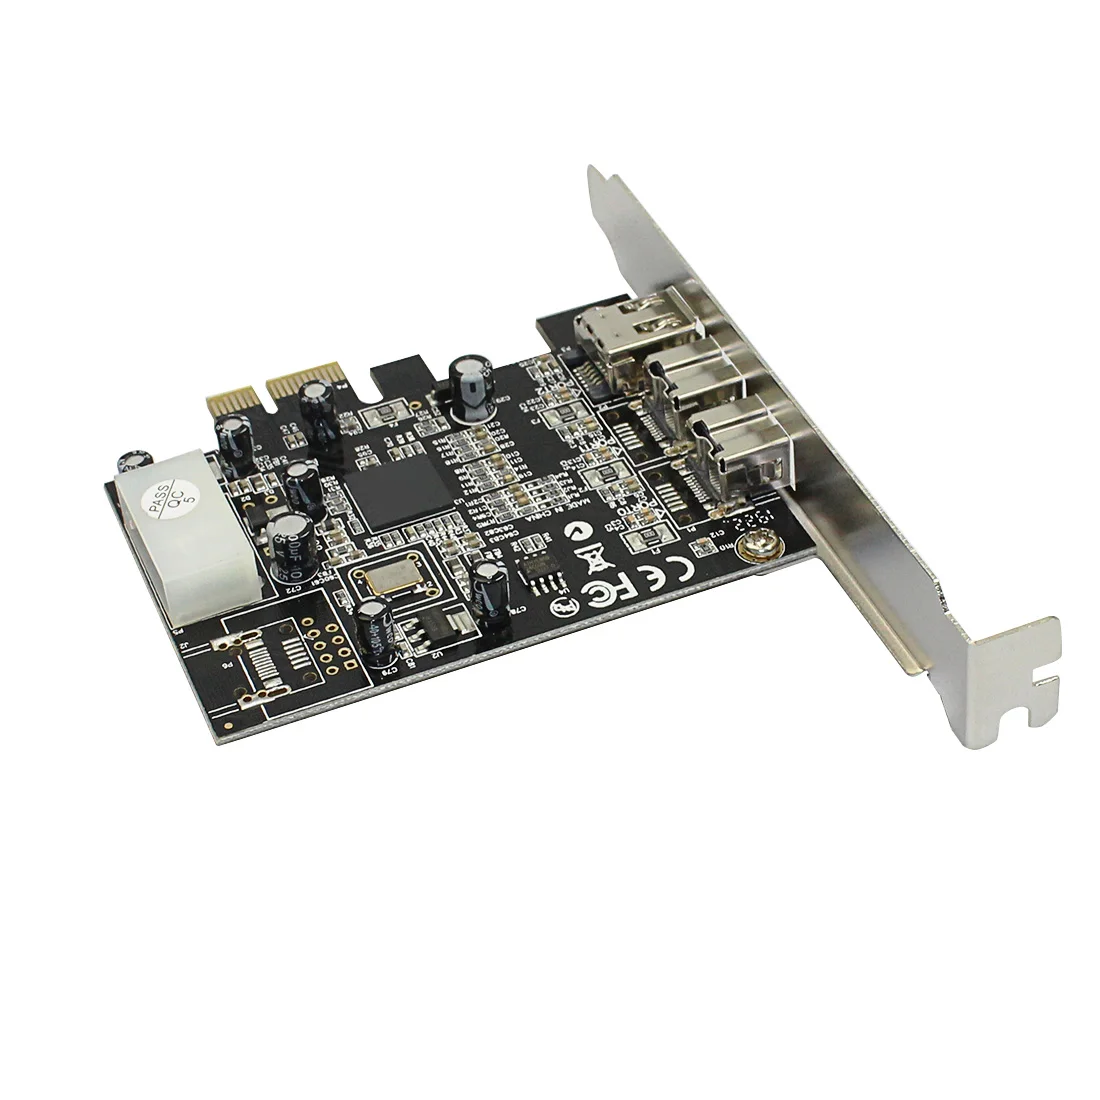 PCIE Combo 3 Prievadai 2x 1394B 9Pin + 1x, kai 1394a 6Pin PCI-Express Controller Card Adapter Išplėtimo IEEE 1394 B+A FireWire 800